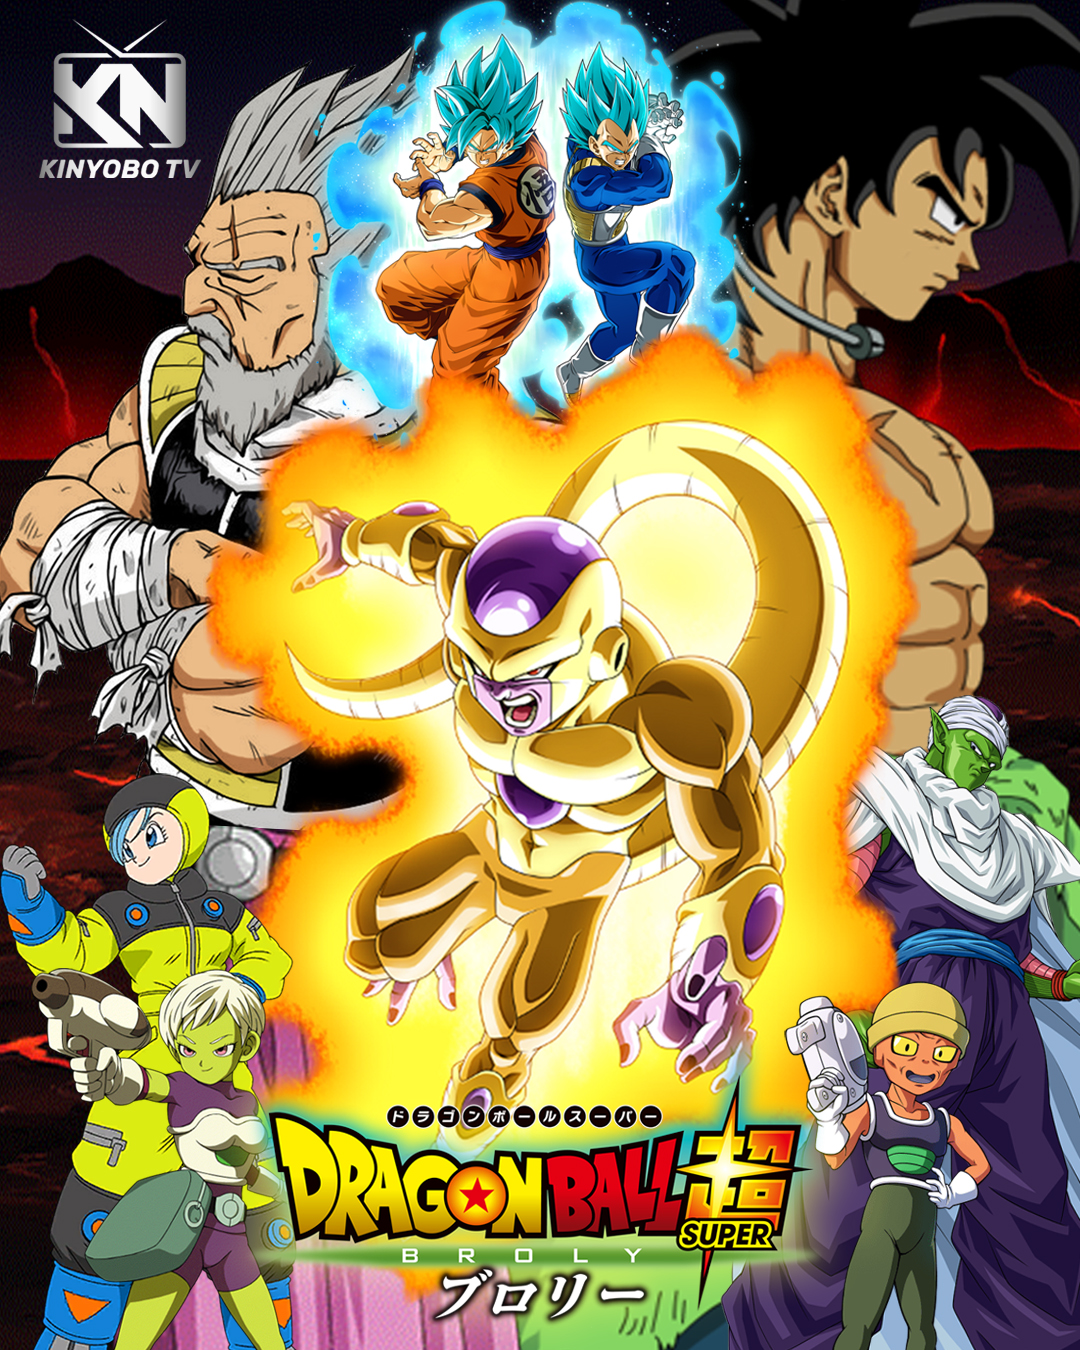 Dragon Ball super:broly (poster) by alexbocioart on DeviantArt